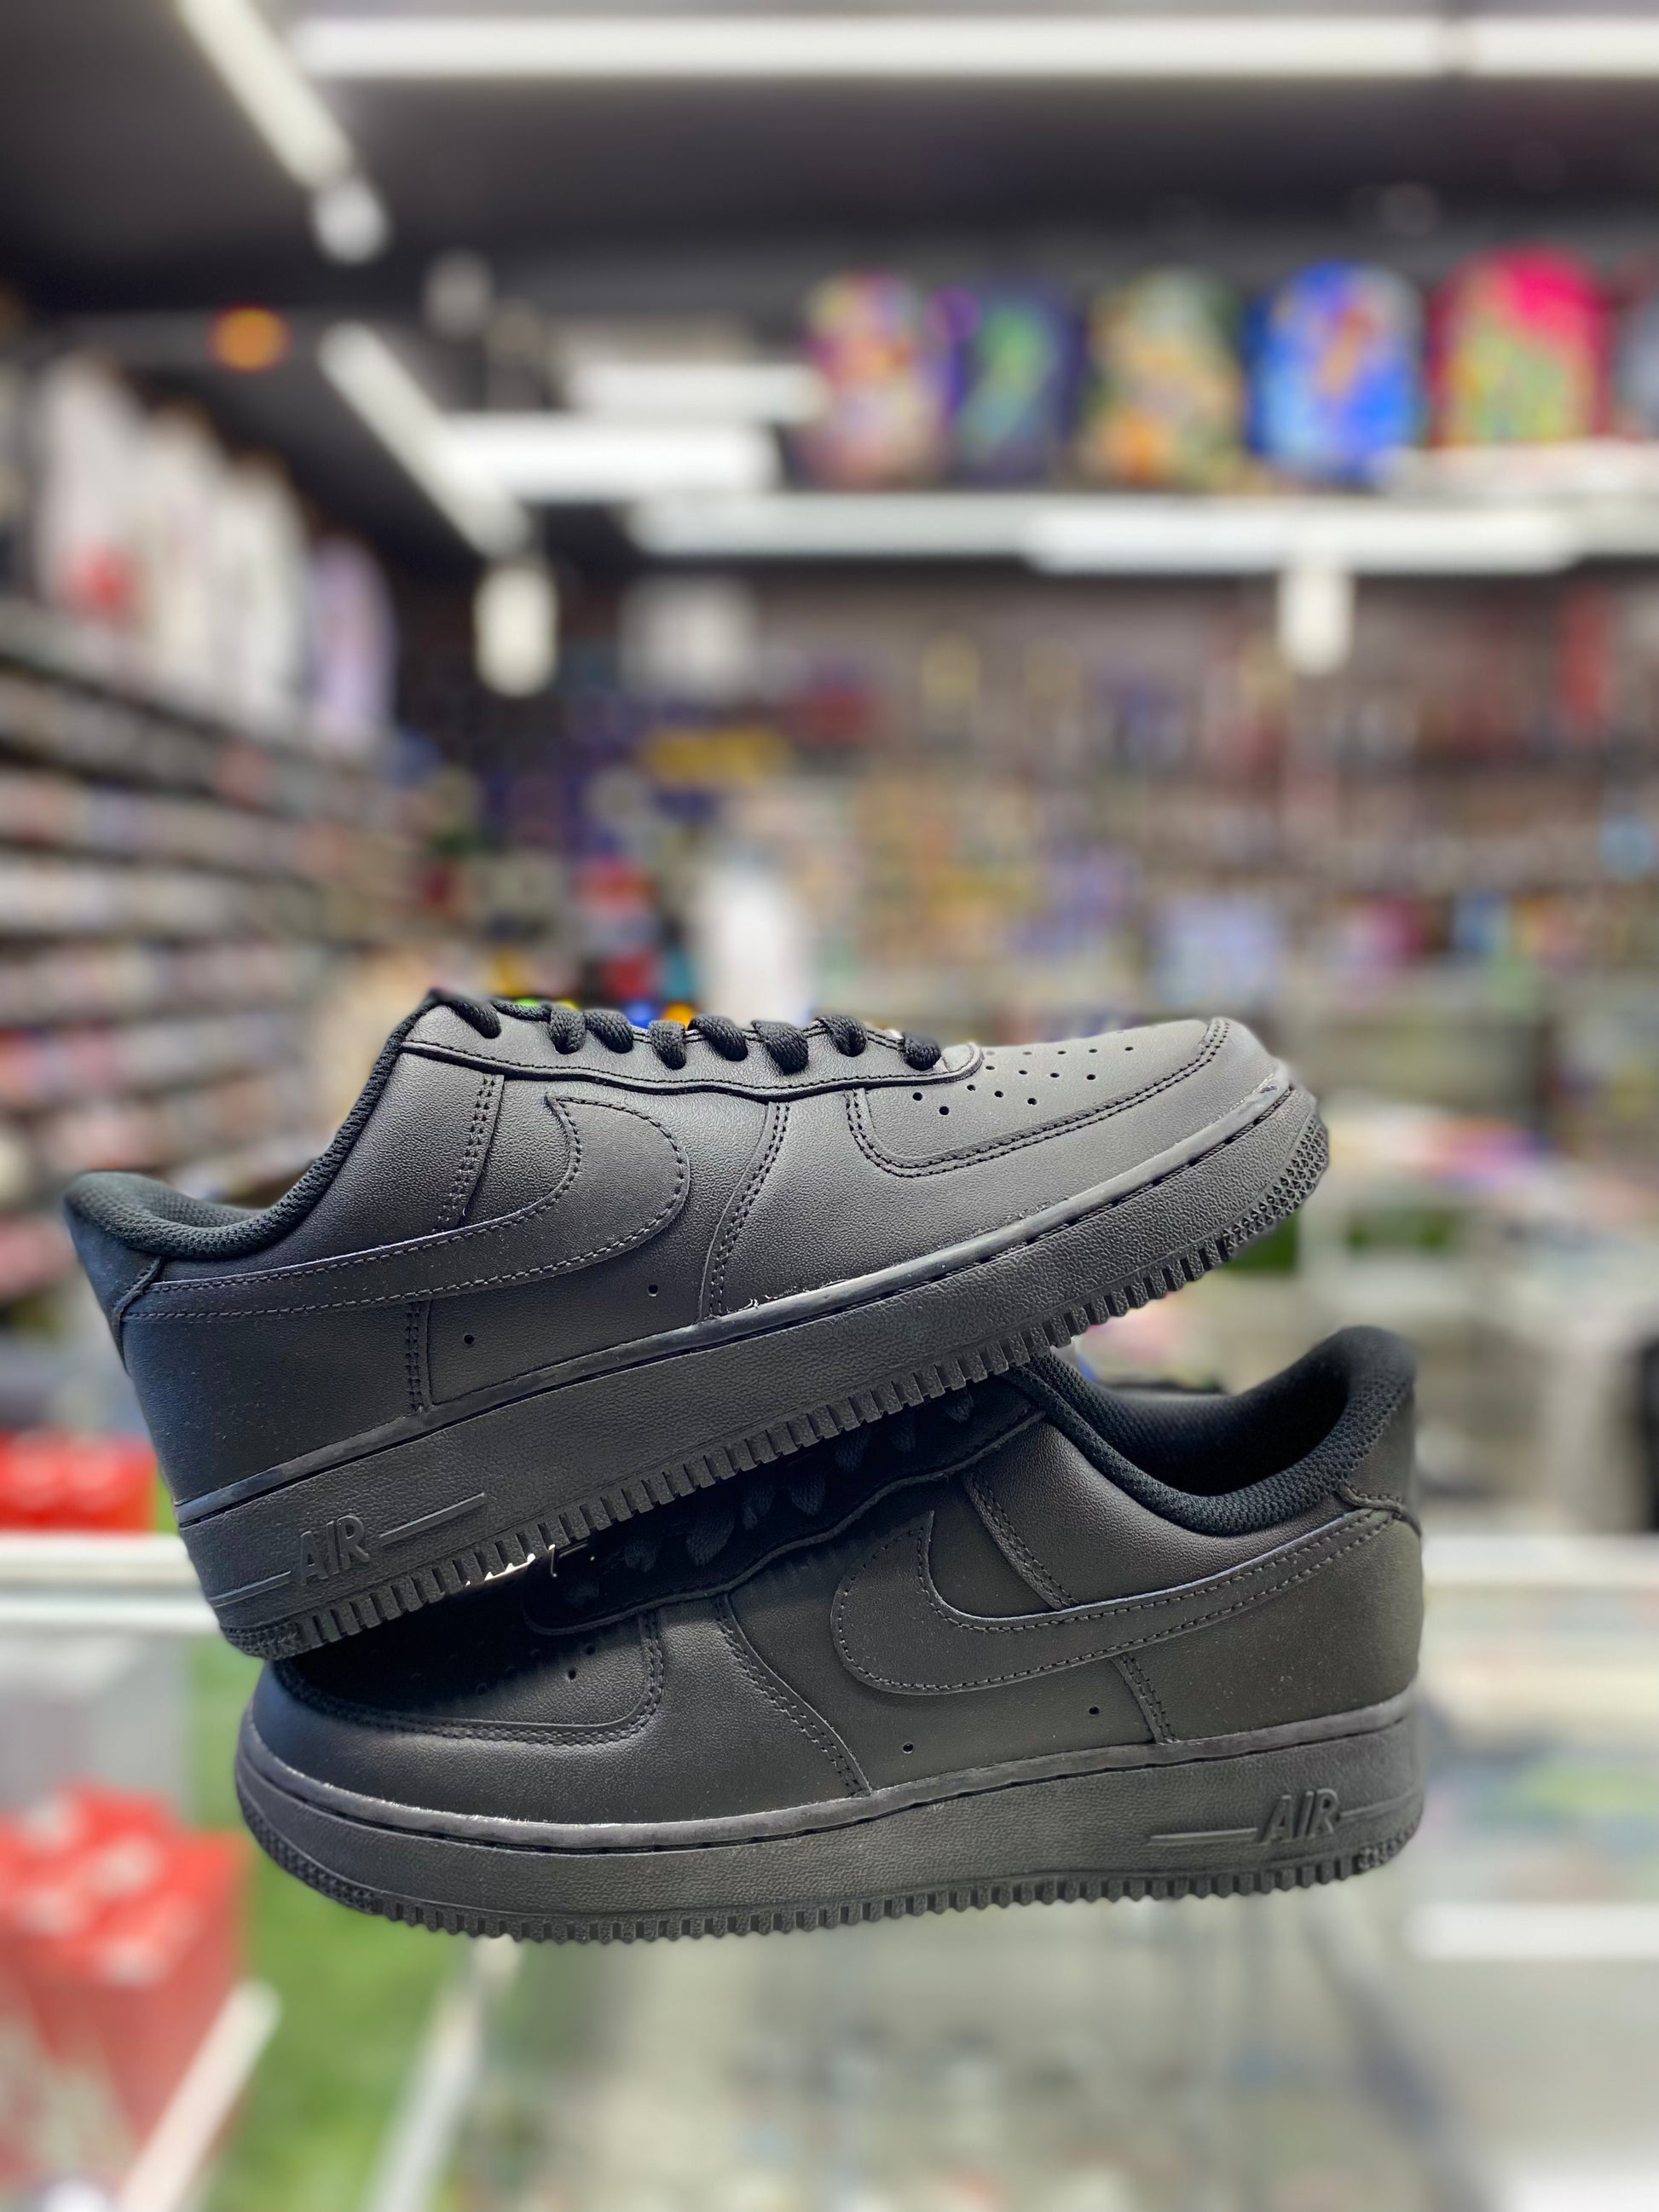 Nike Air Force 1 low Triple Black Kids Shoes Size 12C